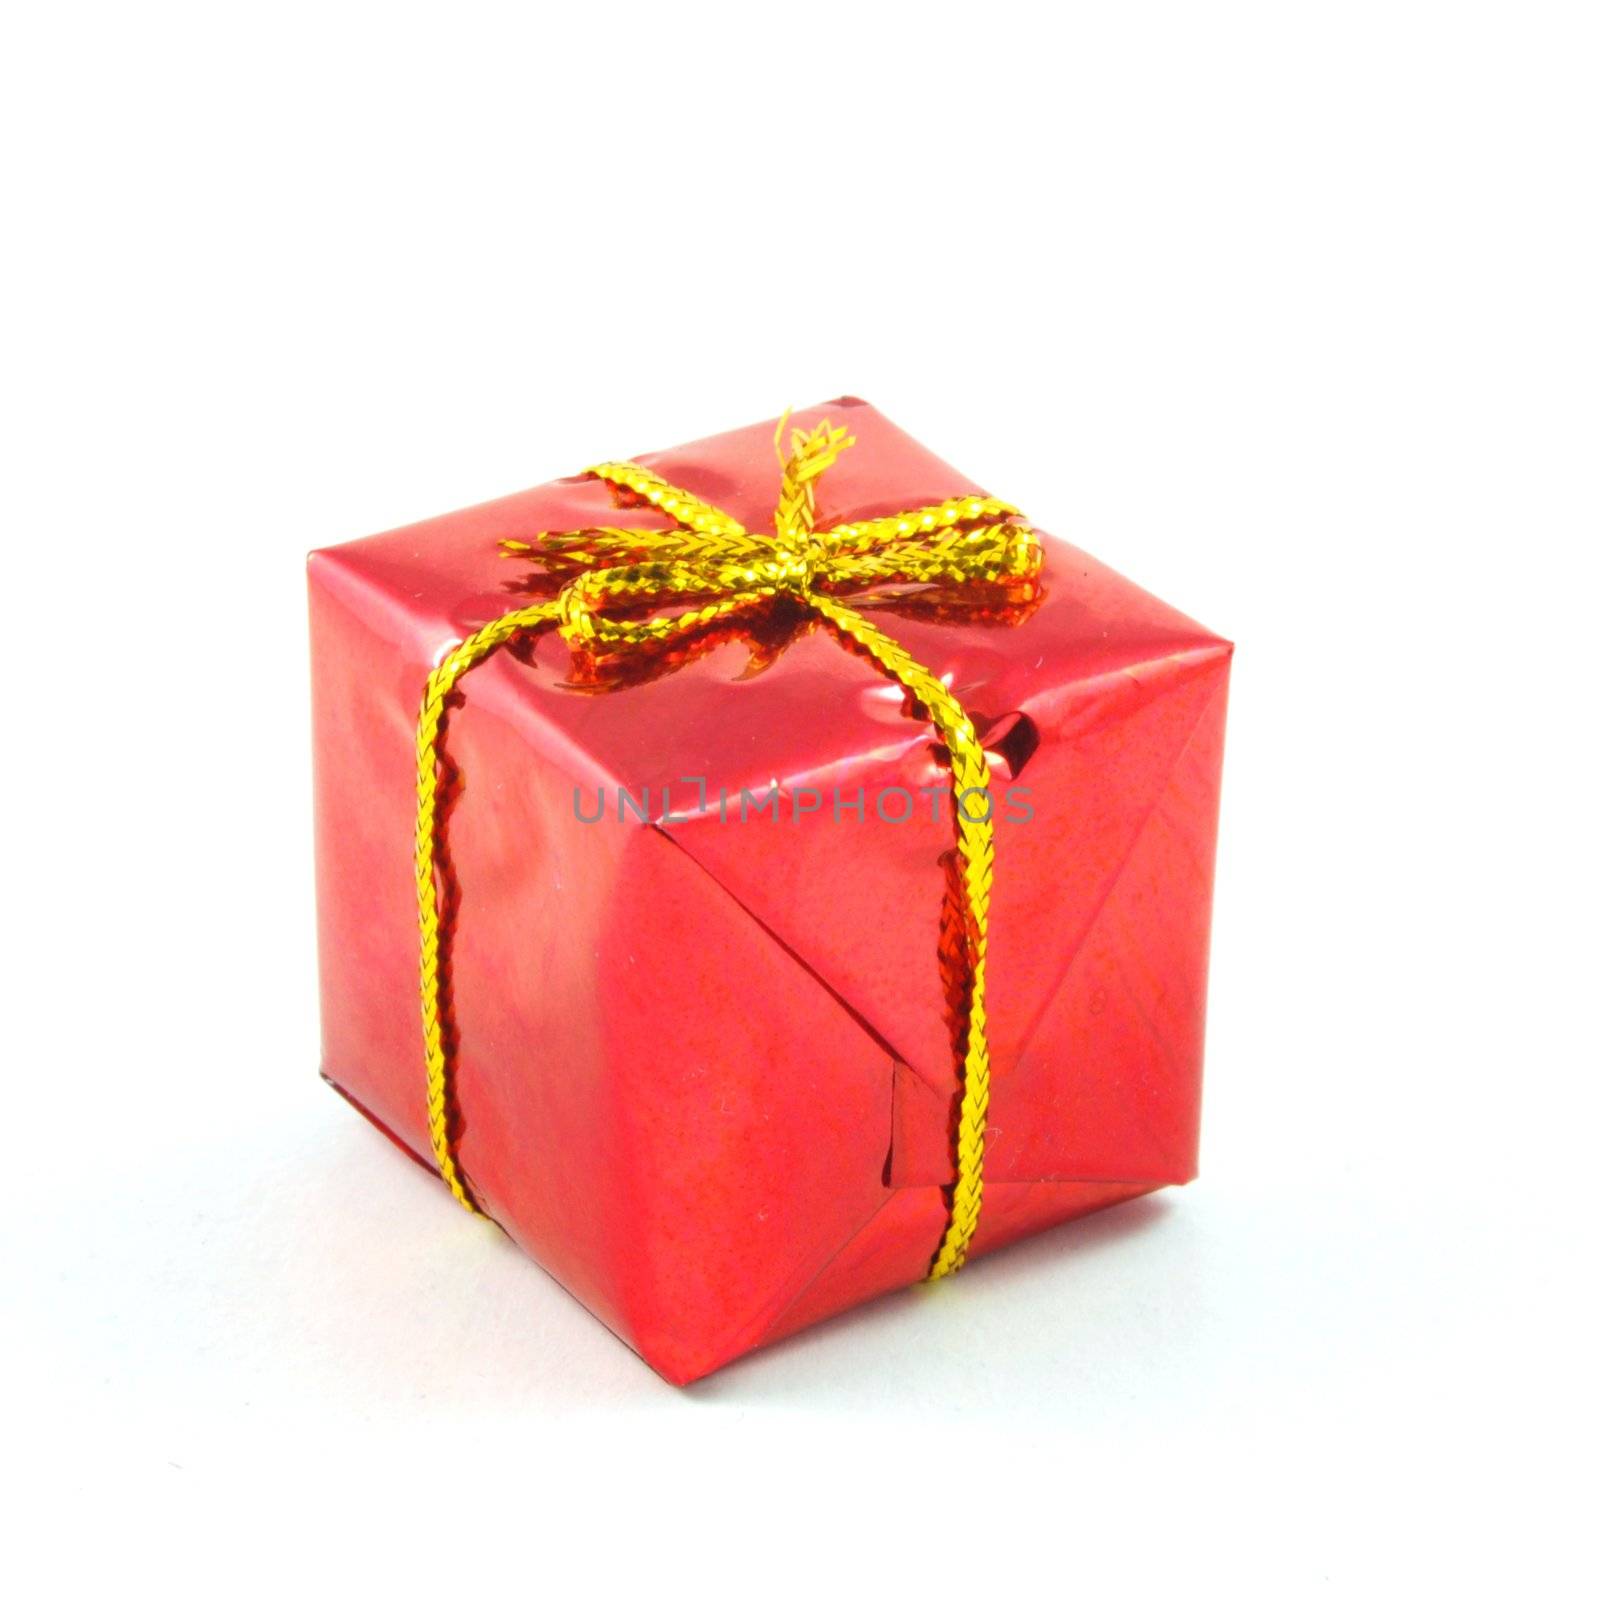 xmas or christmas present box by gunnar3000